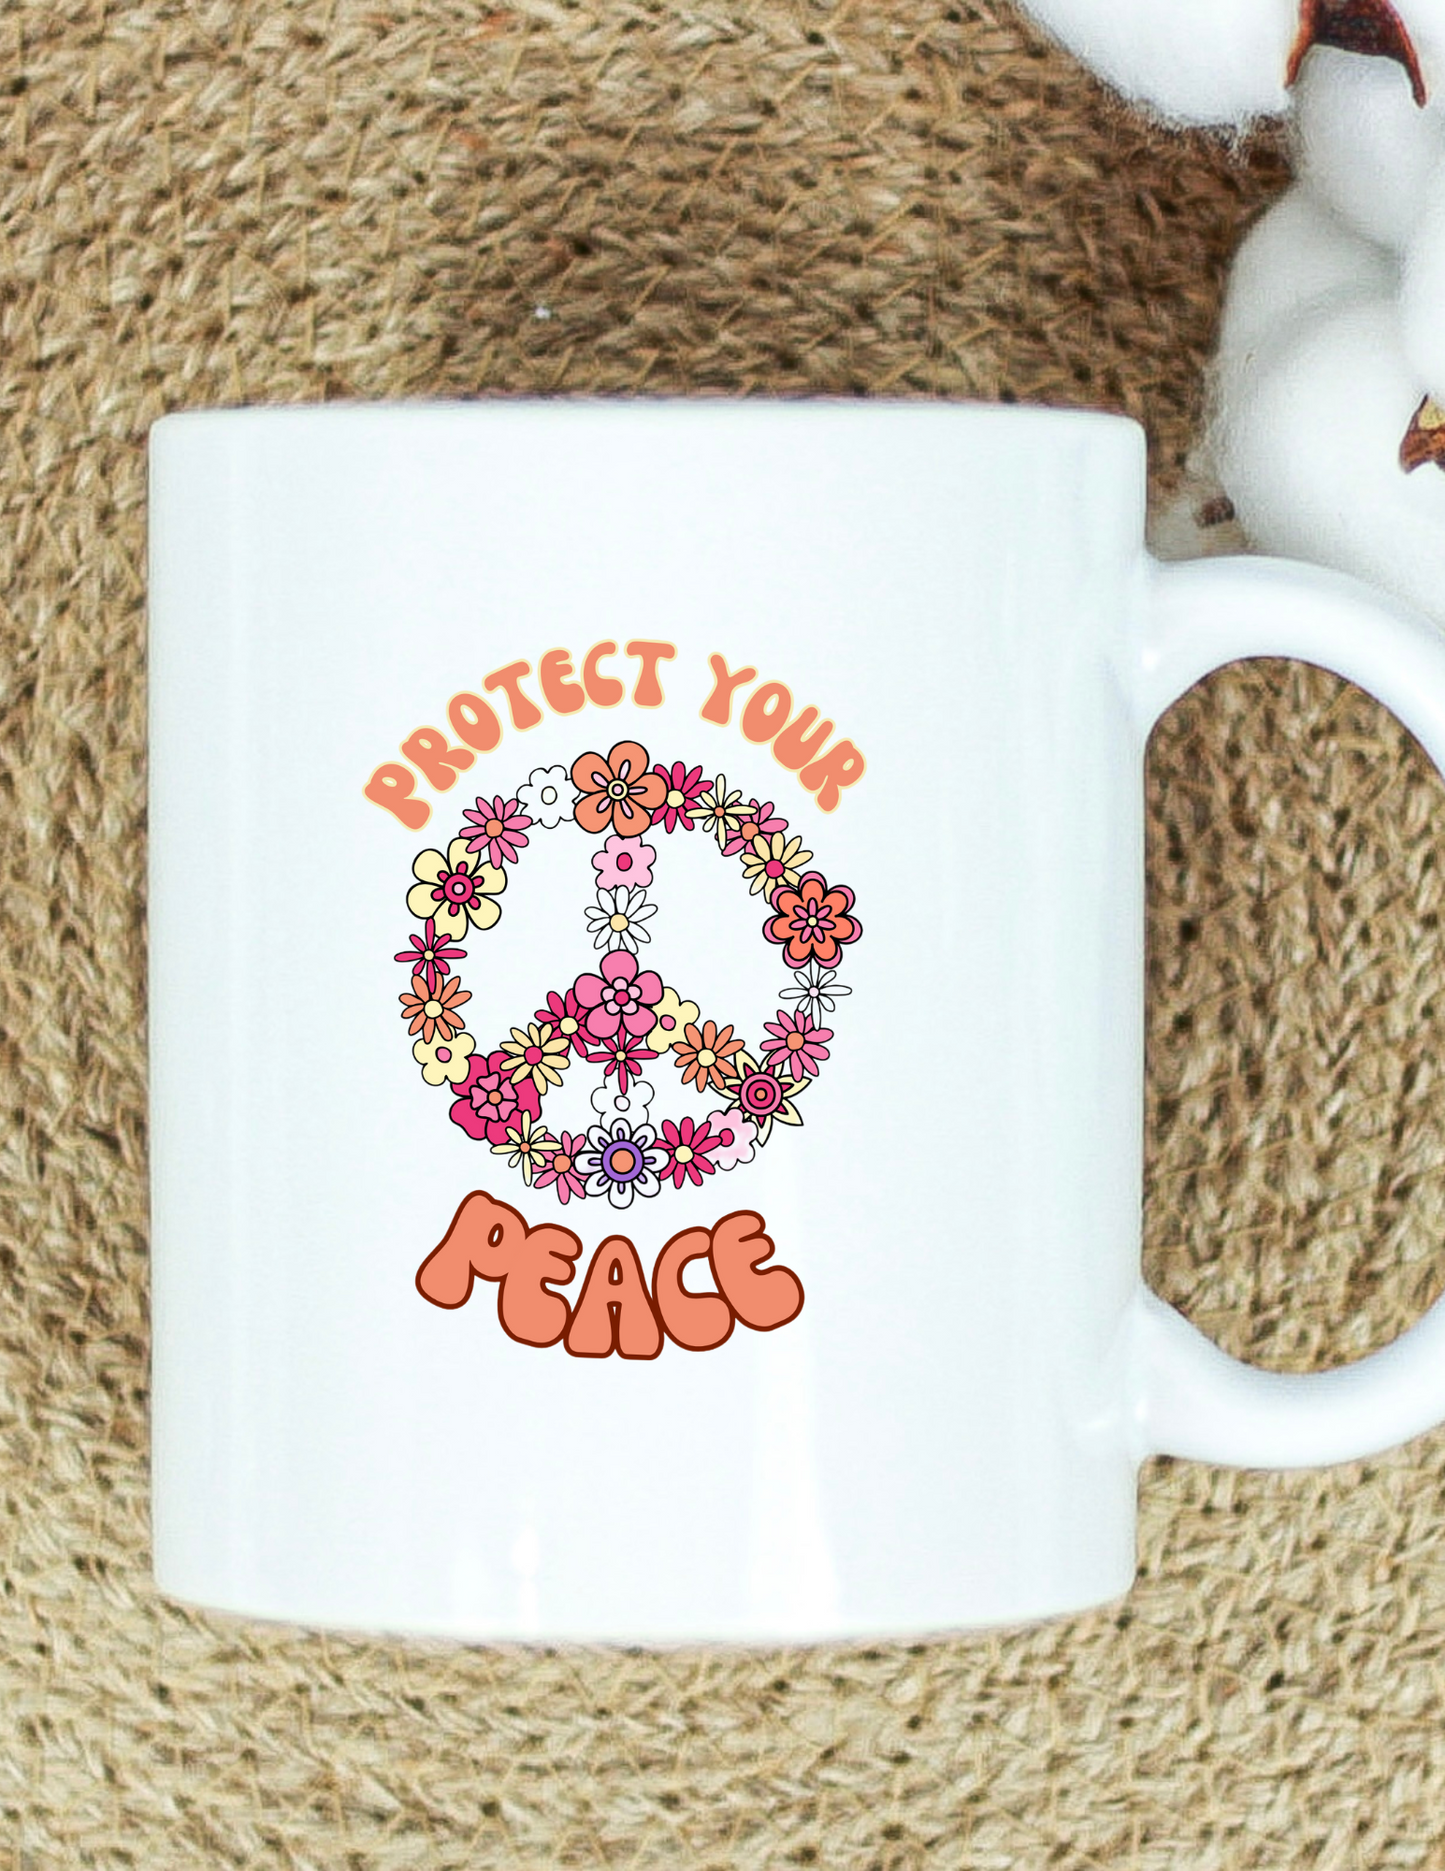 "Protect Your Peace" Coffee Mug